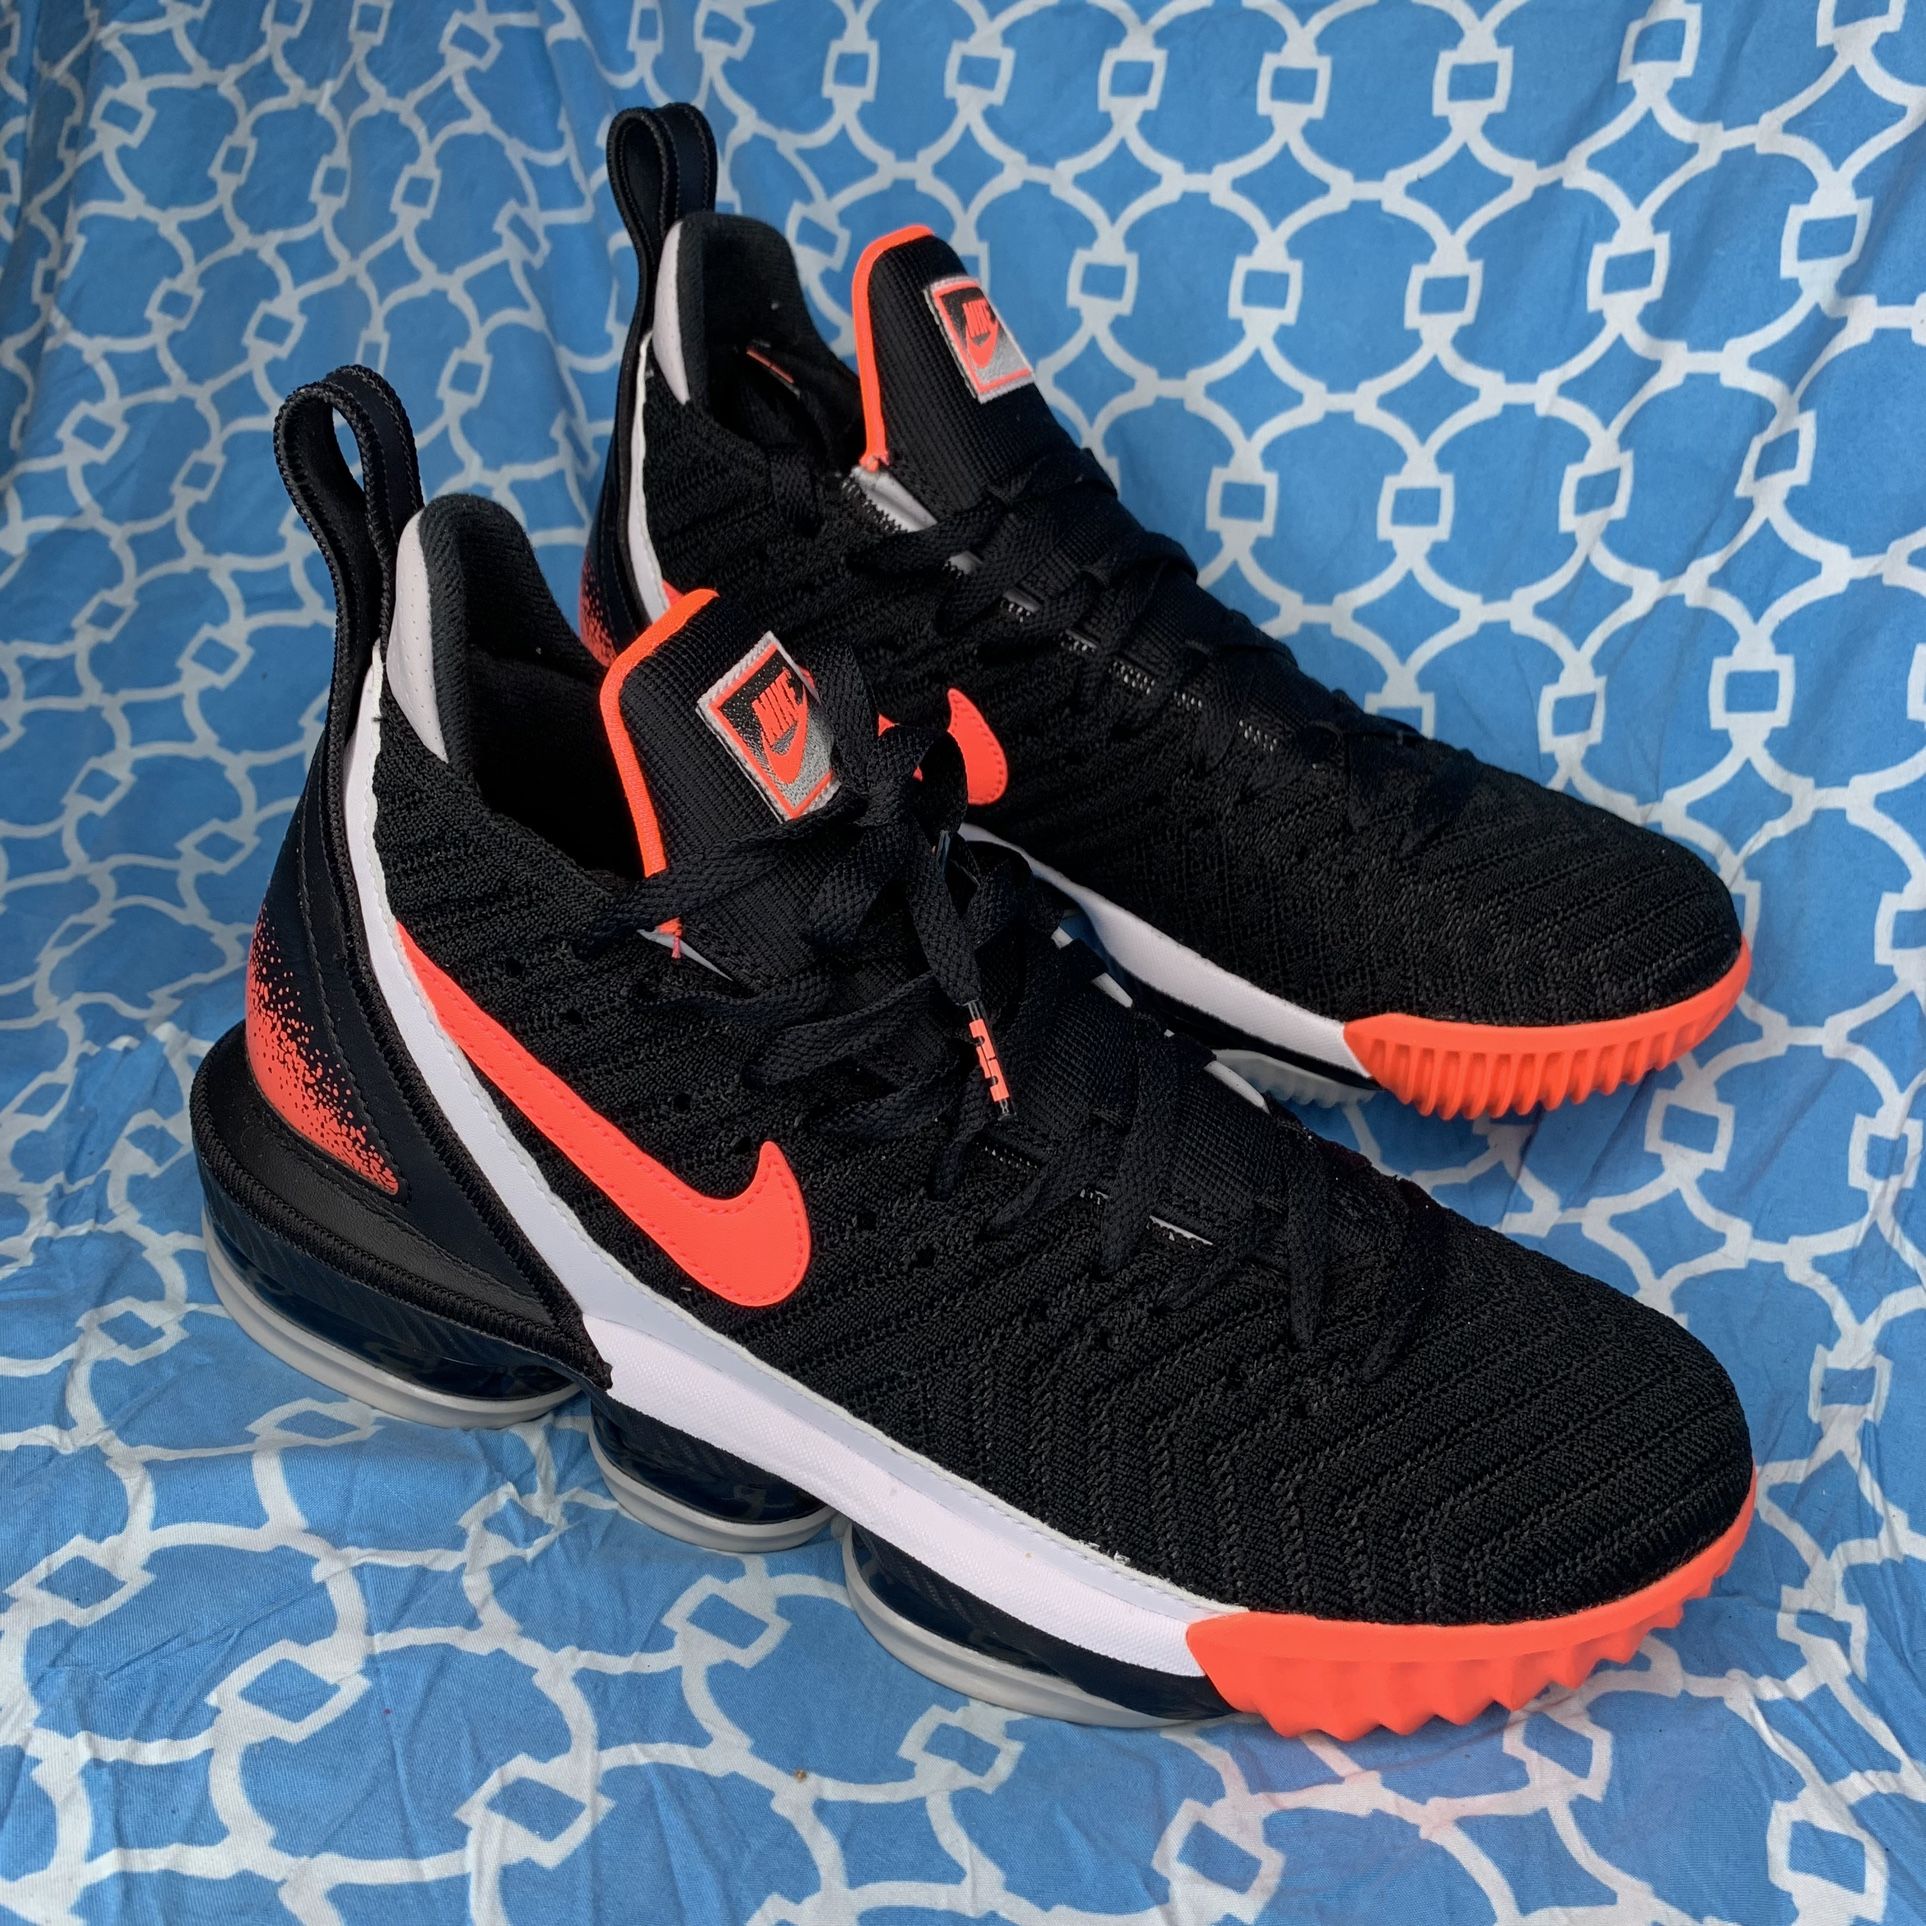 Nike Men’s size 10.5 Lebron 16 tech challenge hit lava black red bred sneakers